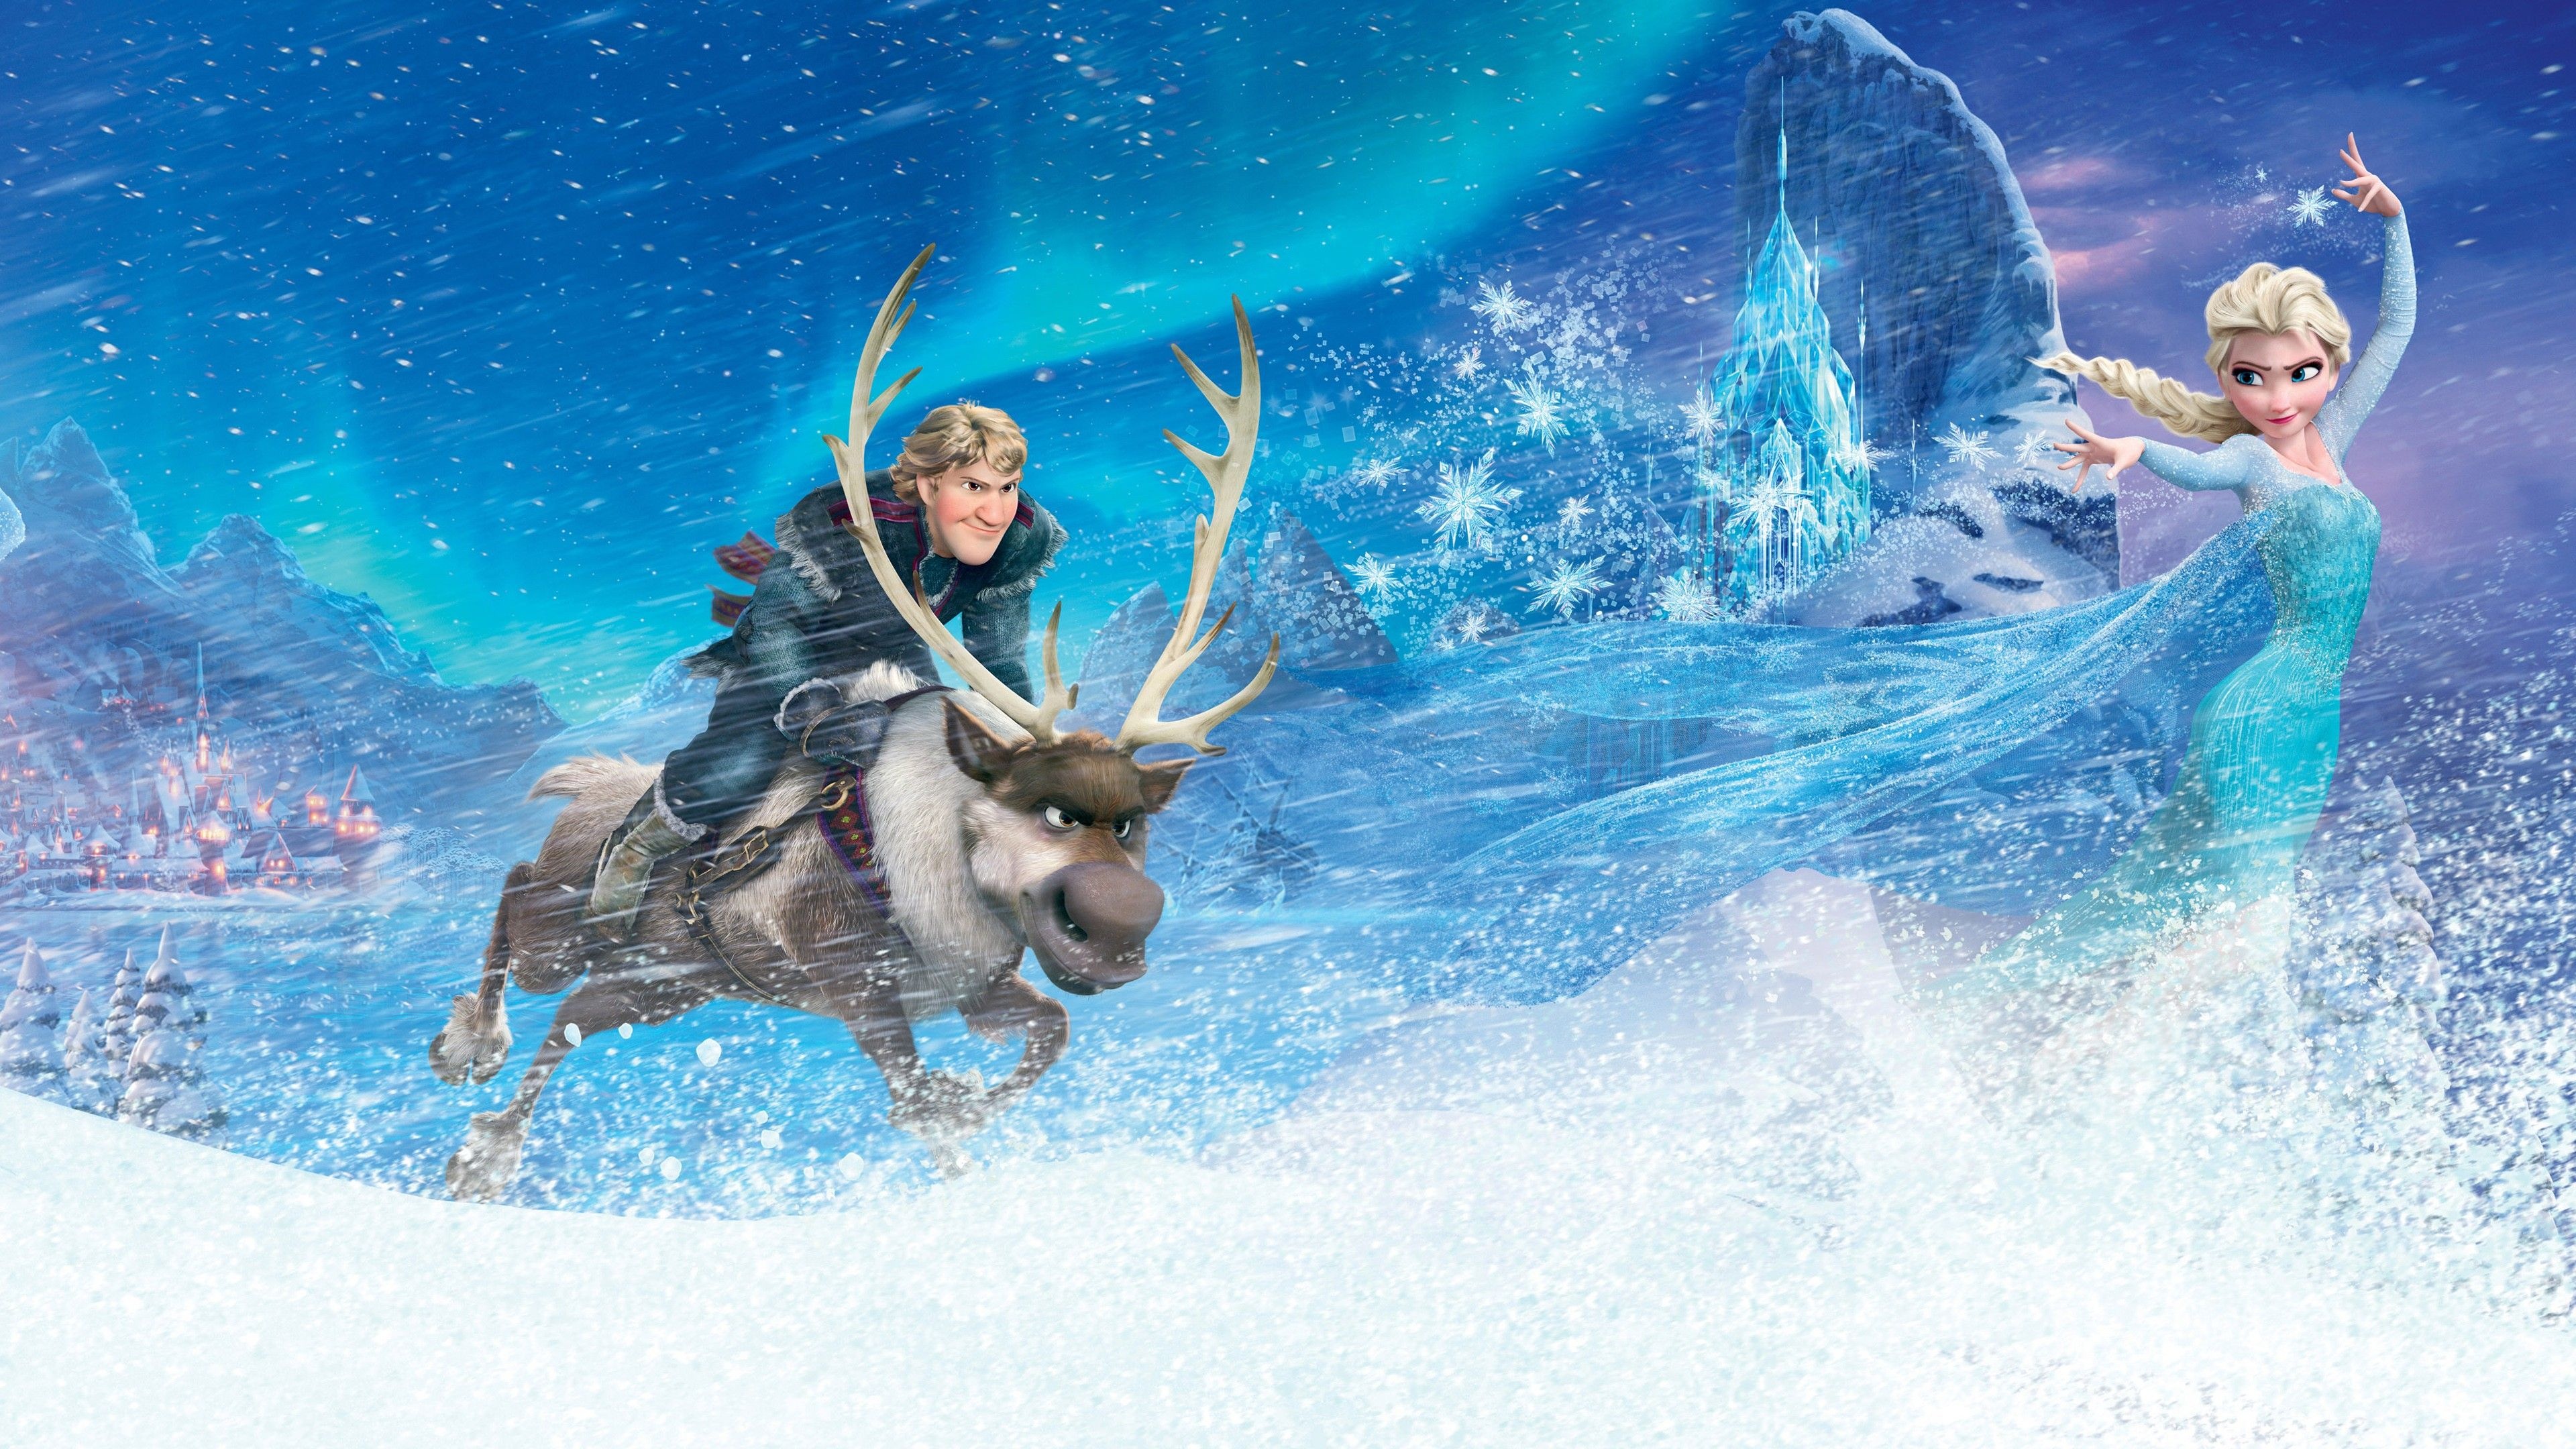 Kristoff, Amazing Frozen wallpapers, Frozen movie, 3840x2160 4K Desktop